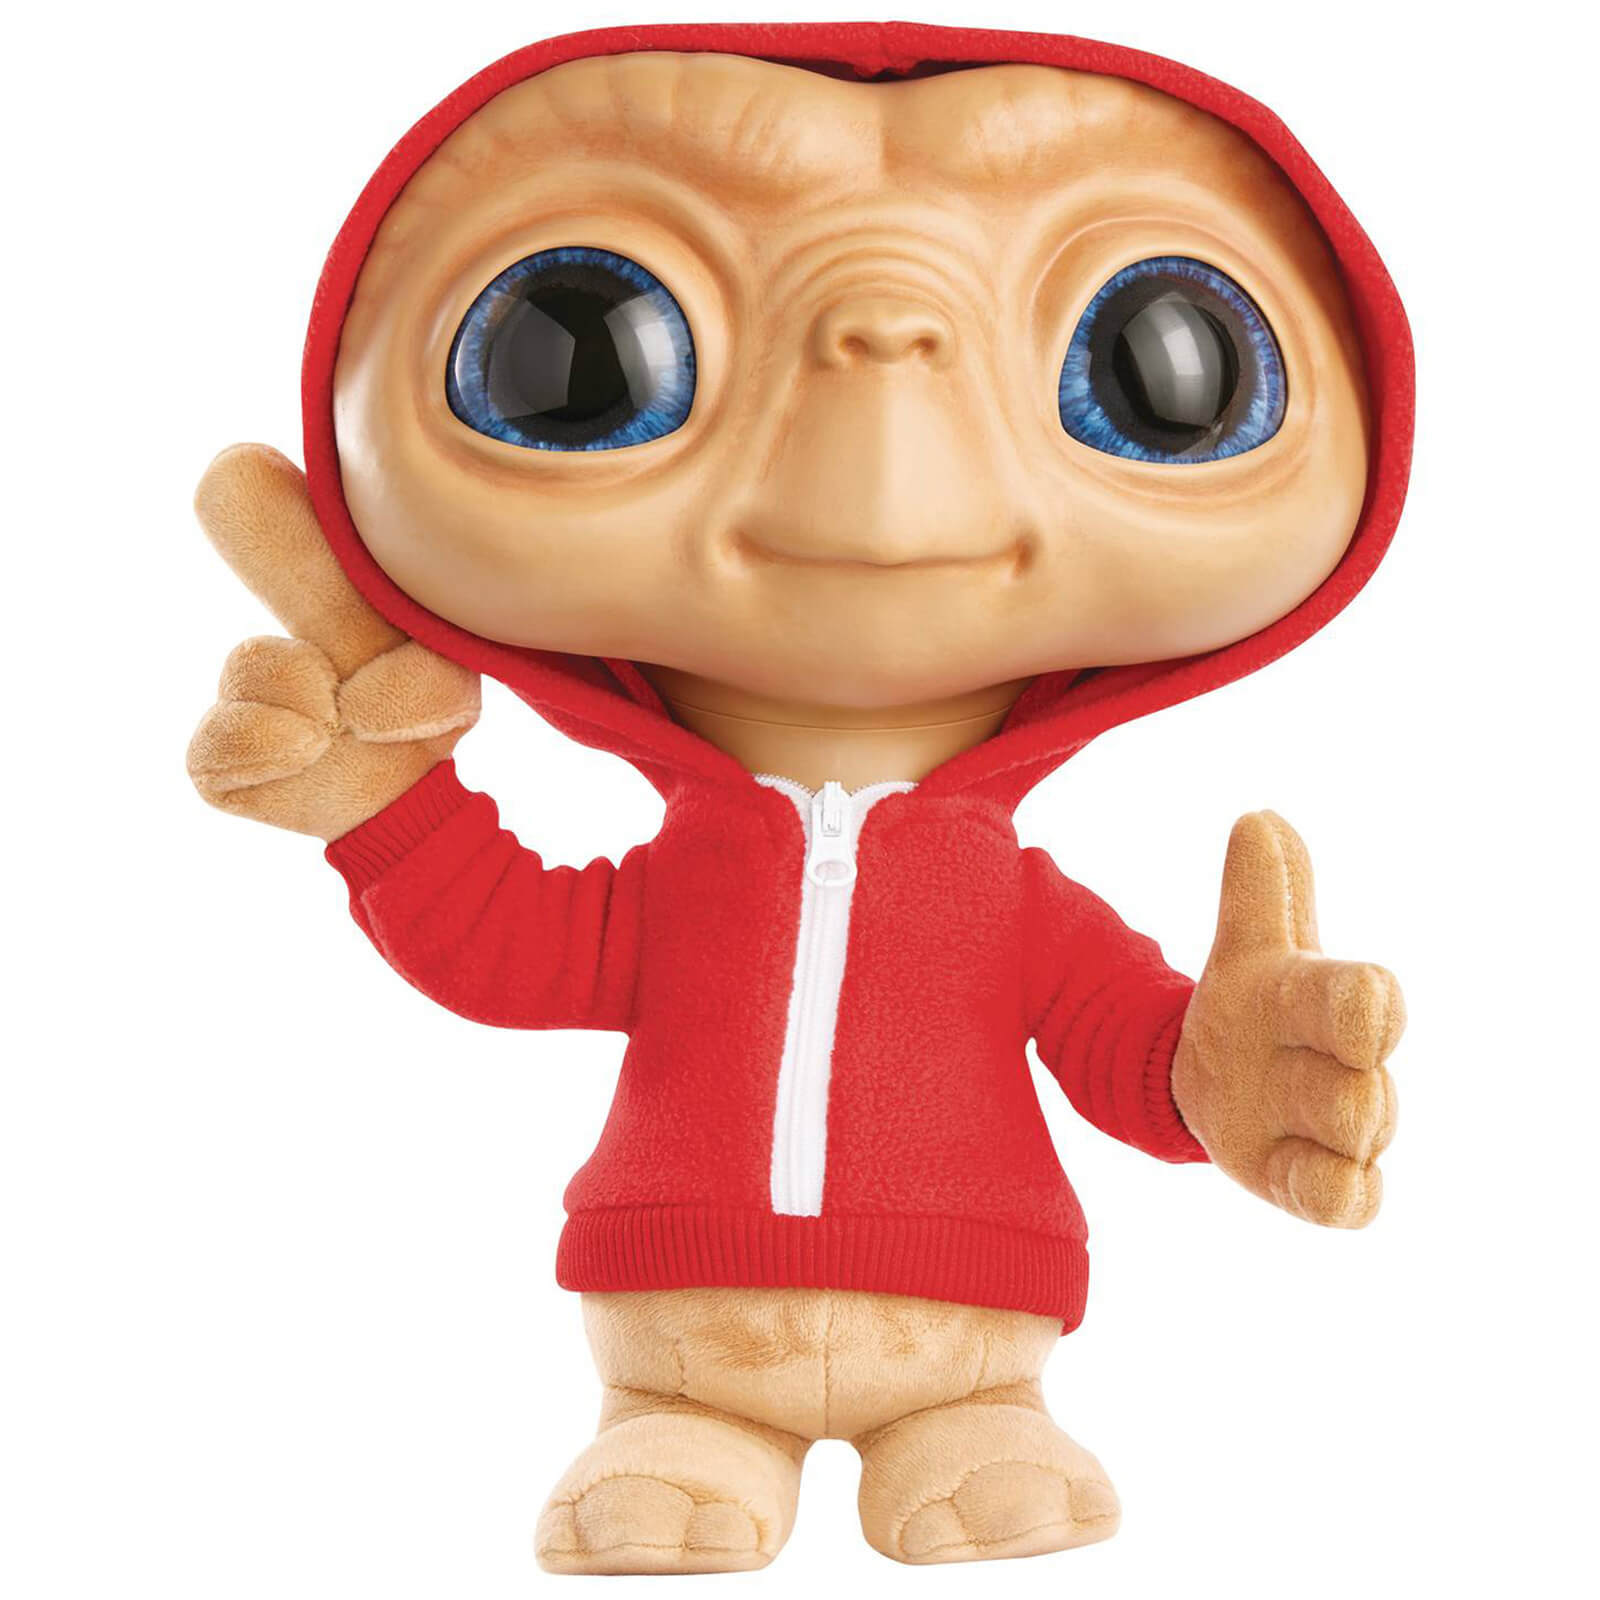 Mattel E.T. Feature 11 Inch Plush